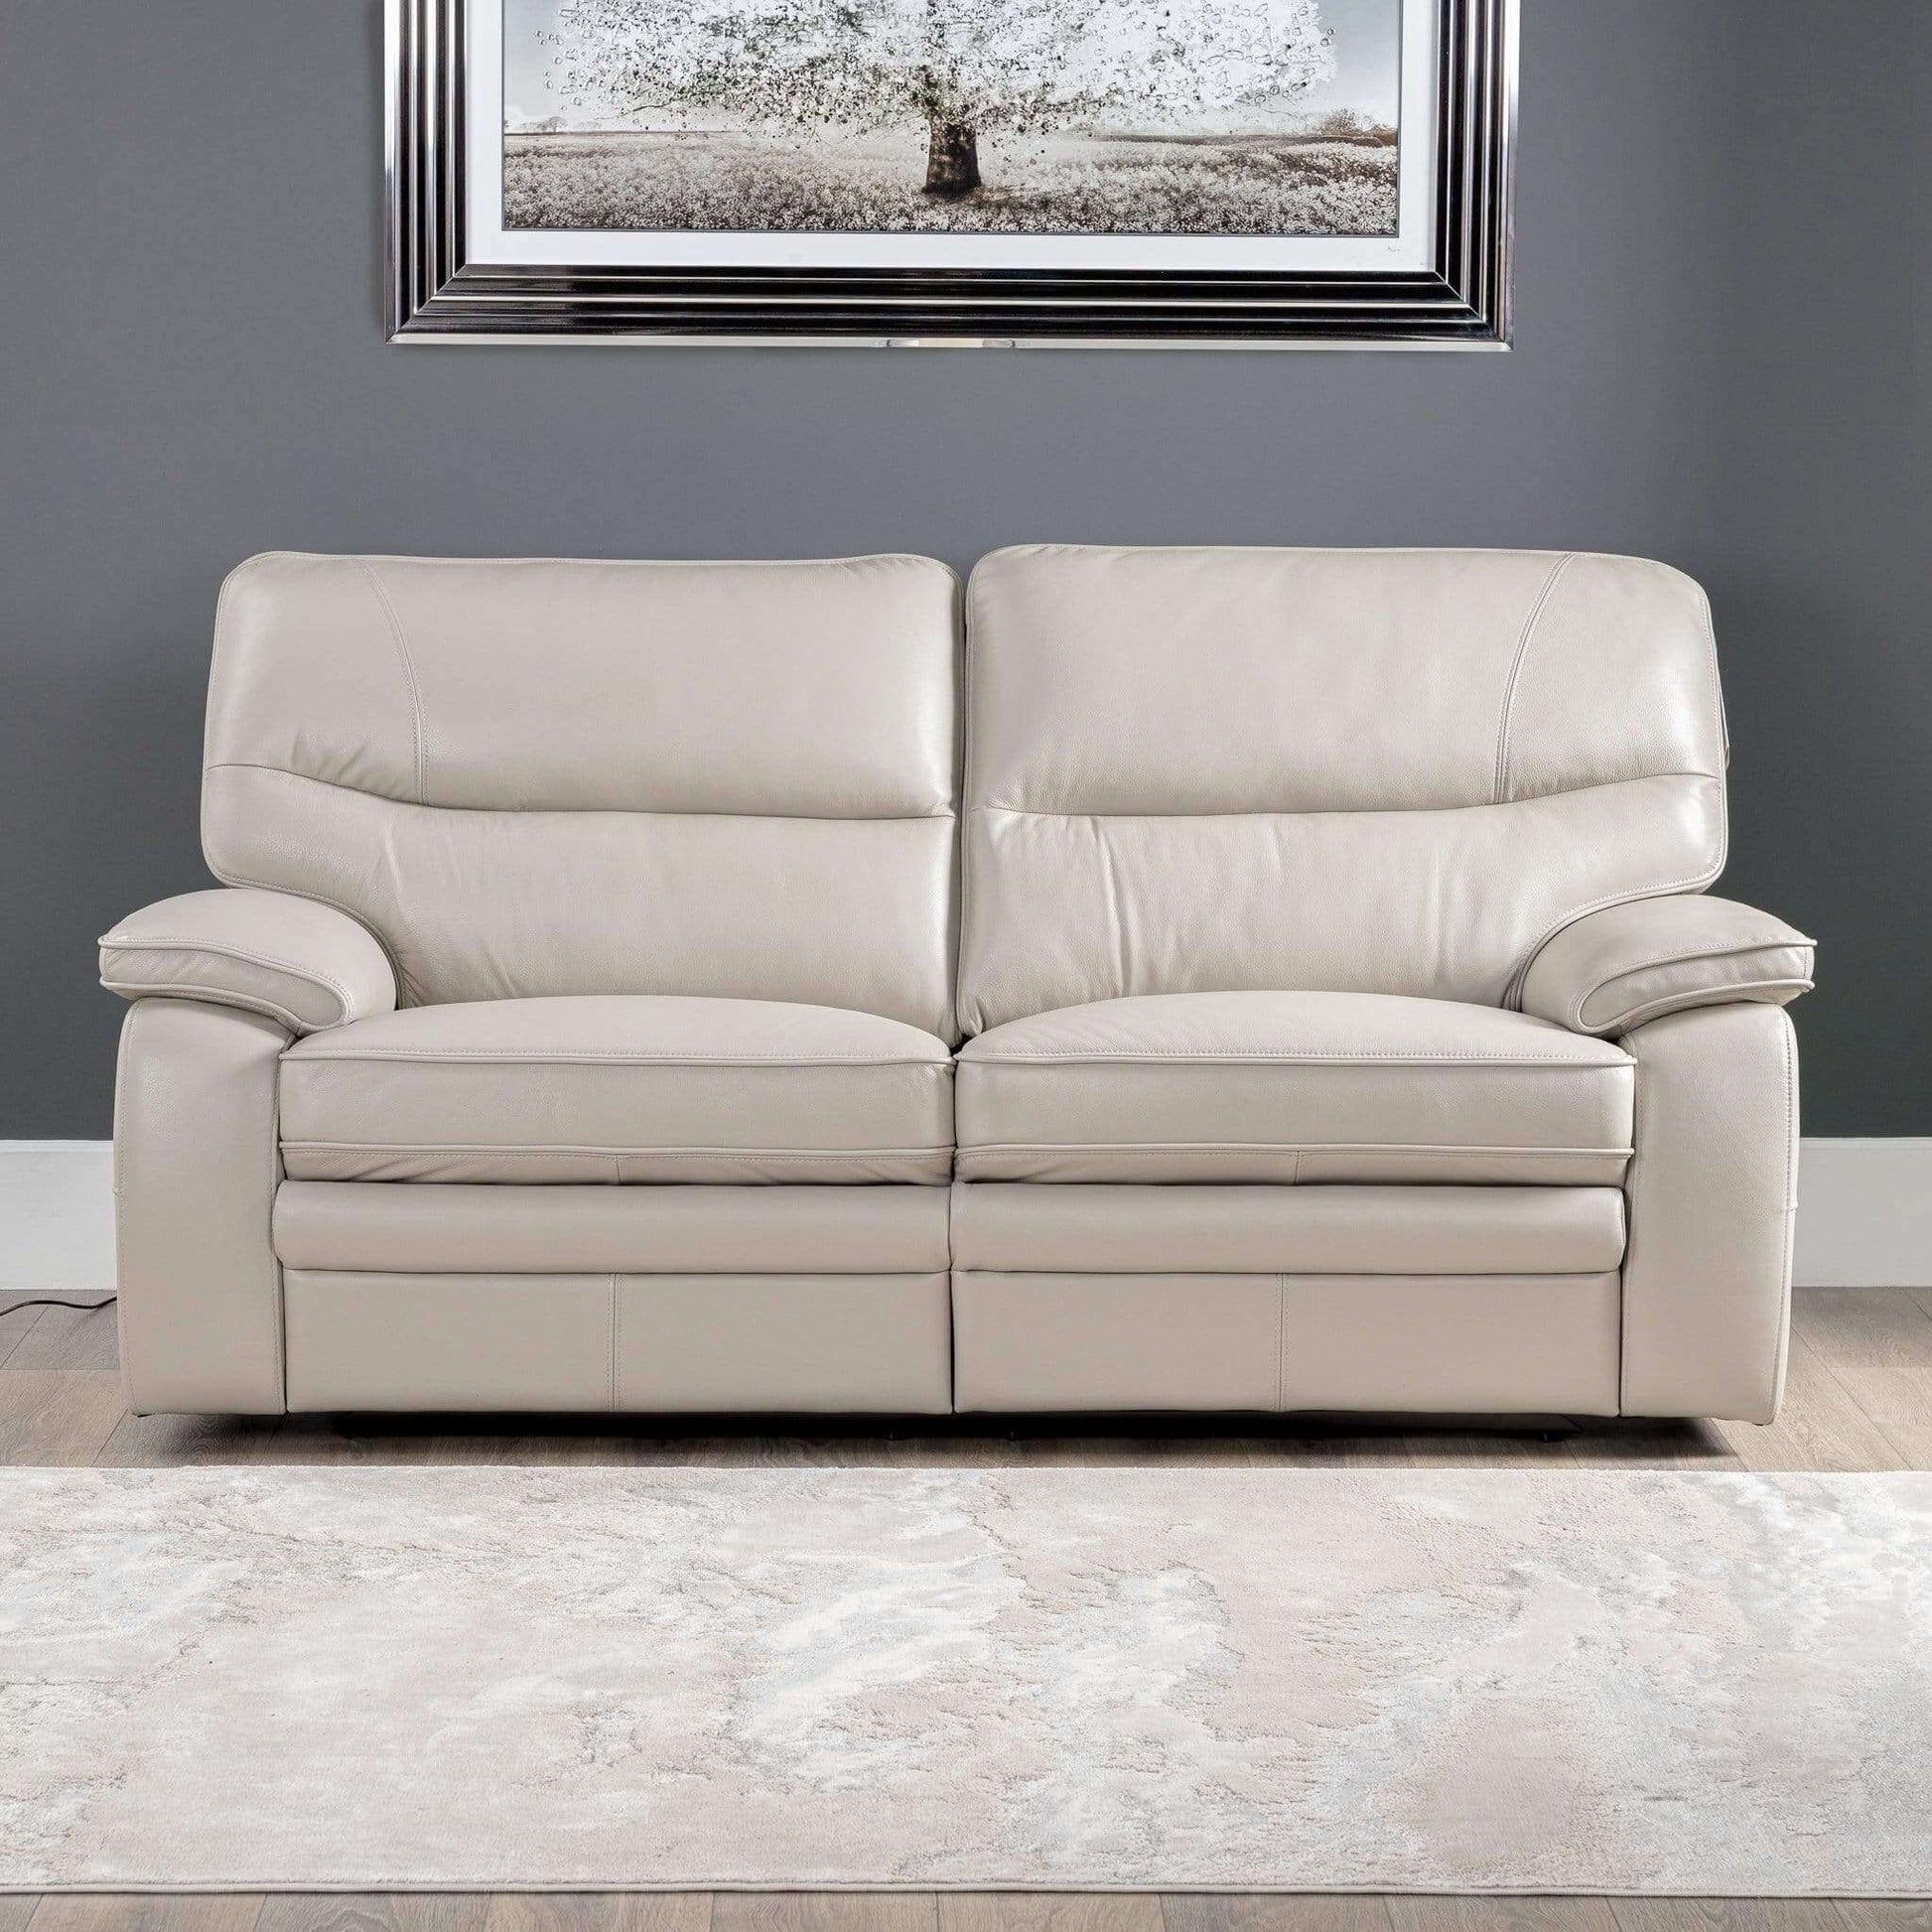 Furniture  -  Comfort King Napa 2.5 Seat Electric Reclining Sofa - Lead Grey  -  50153198